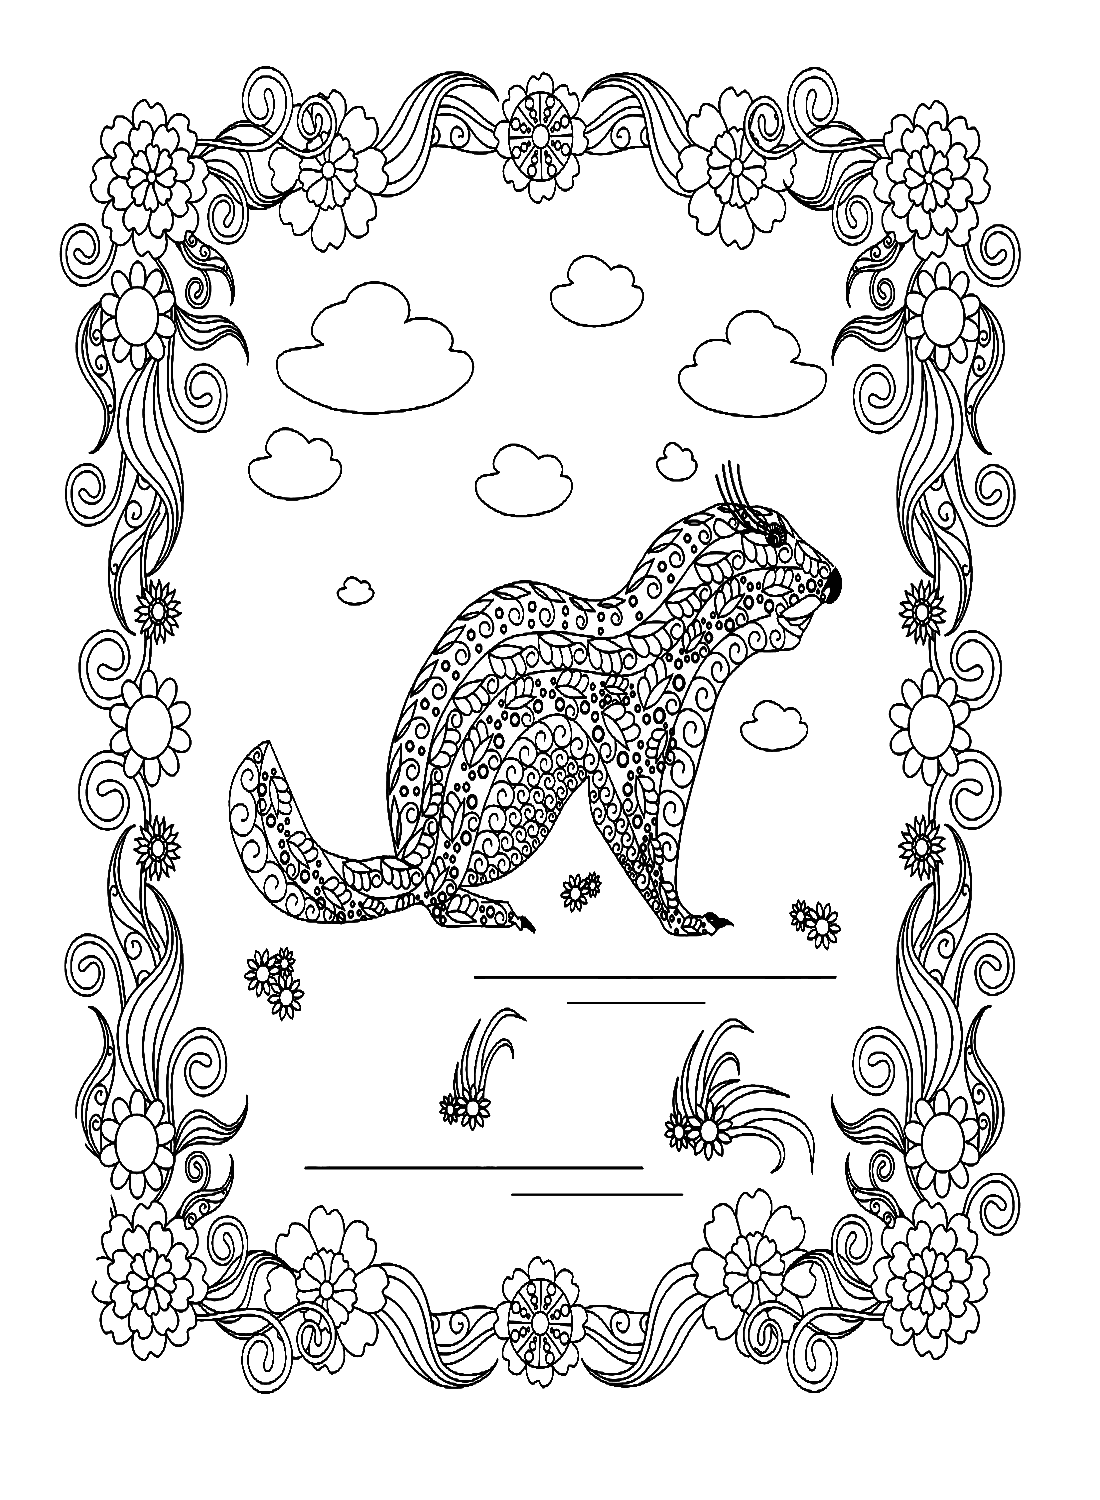 土拨鼠 (Marmot) 的 Zentangle 风格